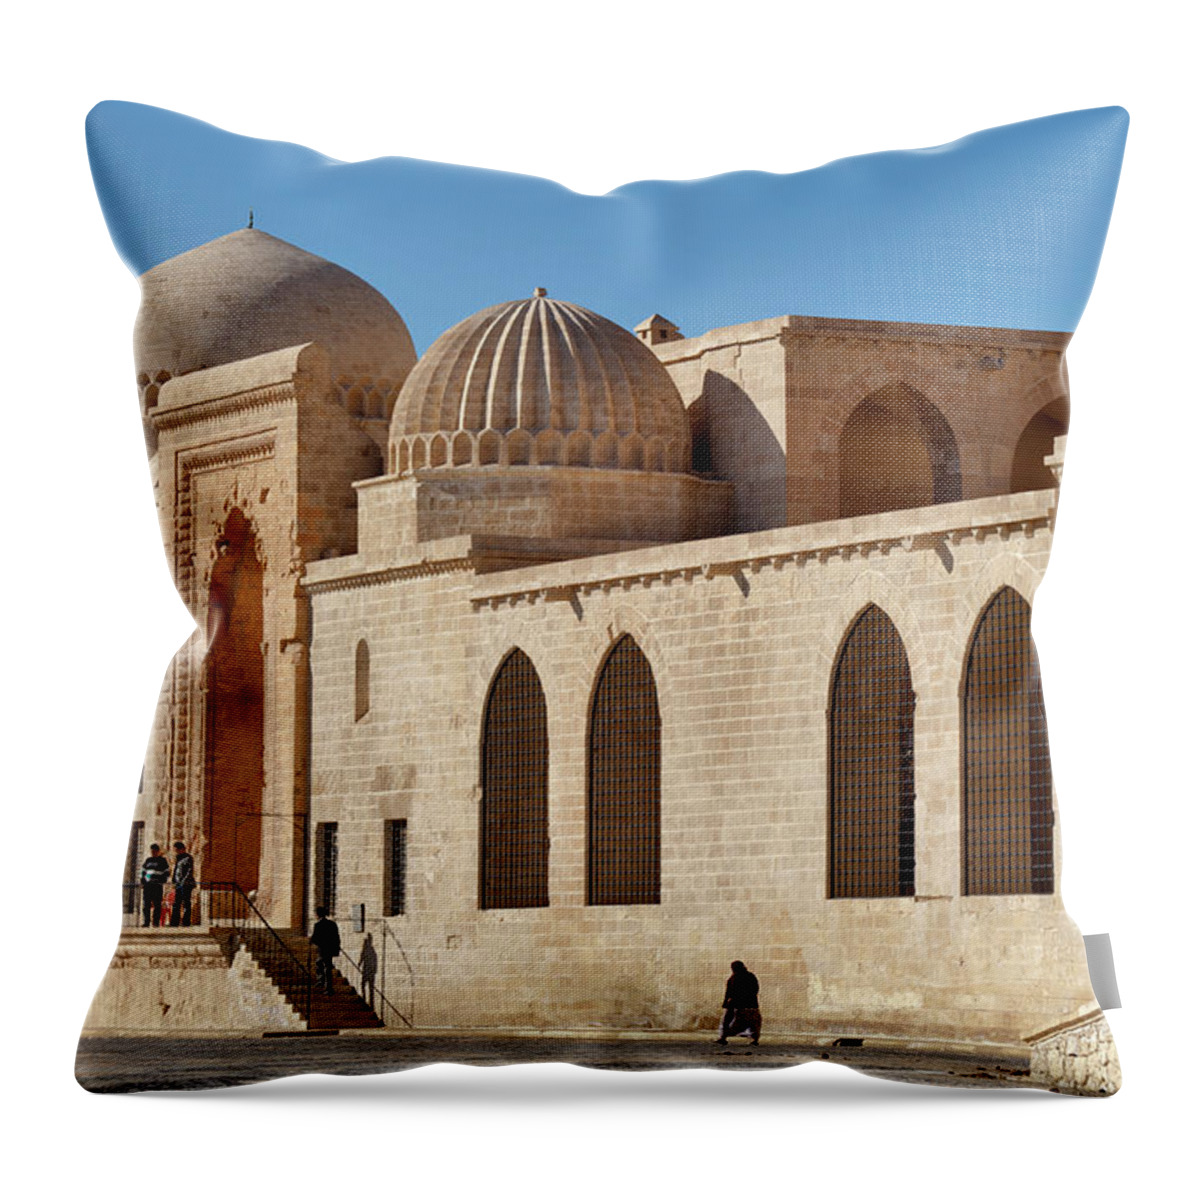 Arch Throw Pillow featuring the photograph Facade Of Kasimiye Medresseh by Izzet Keribar